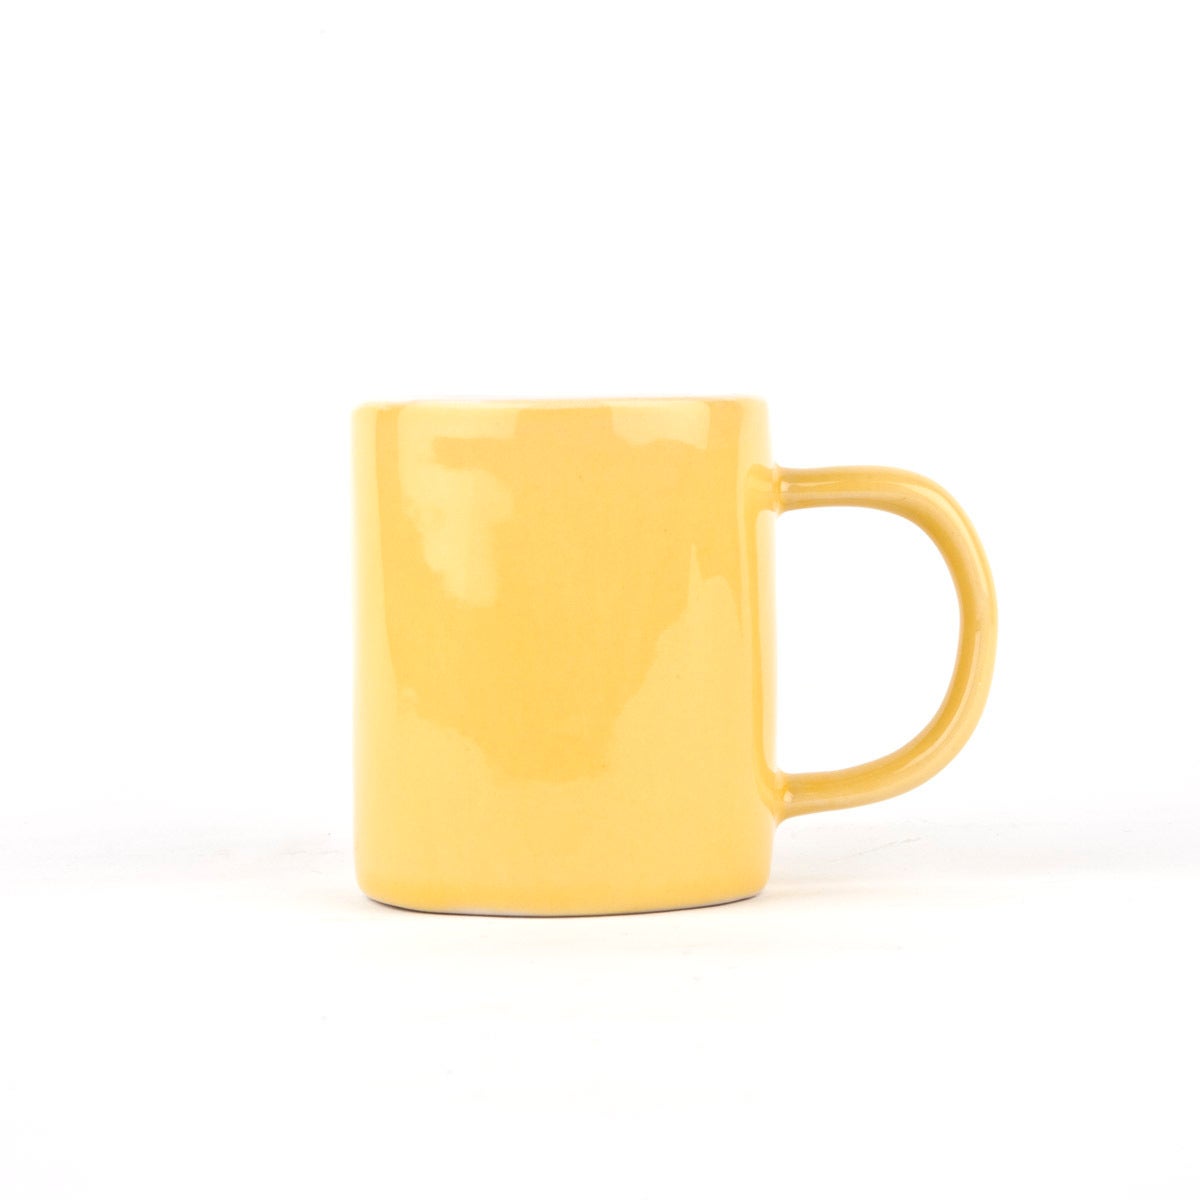 Quails Egg Ceramics Yellow Ceramics Espresso Cup